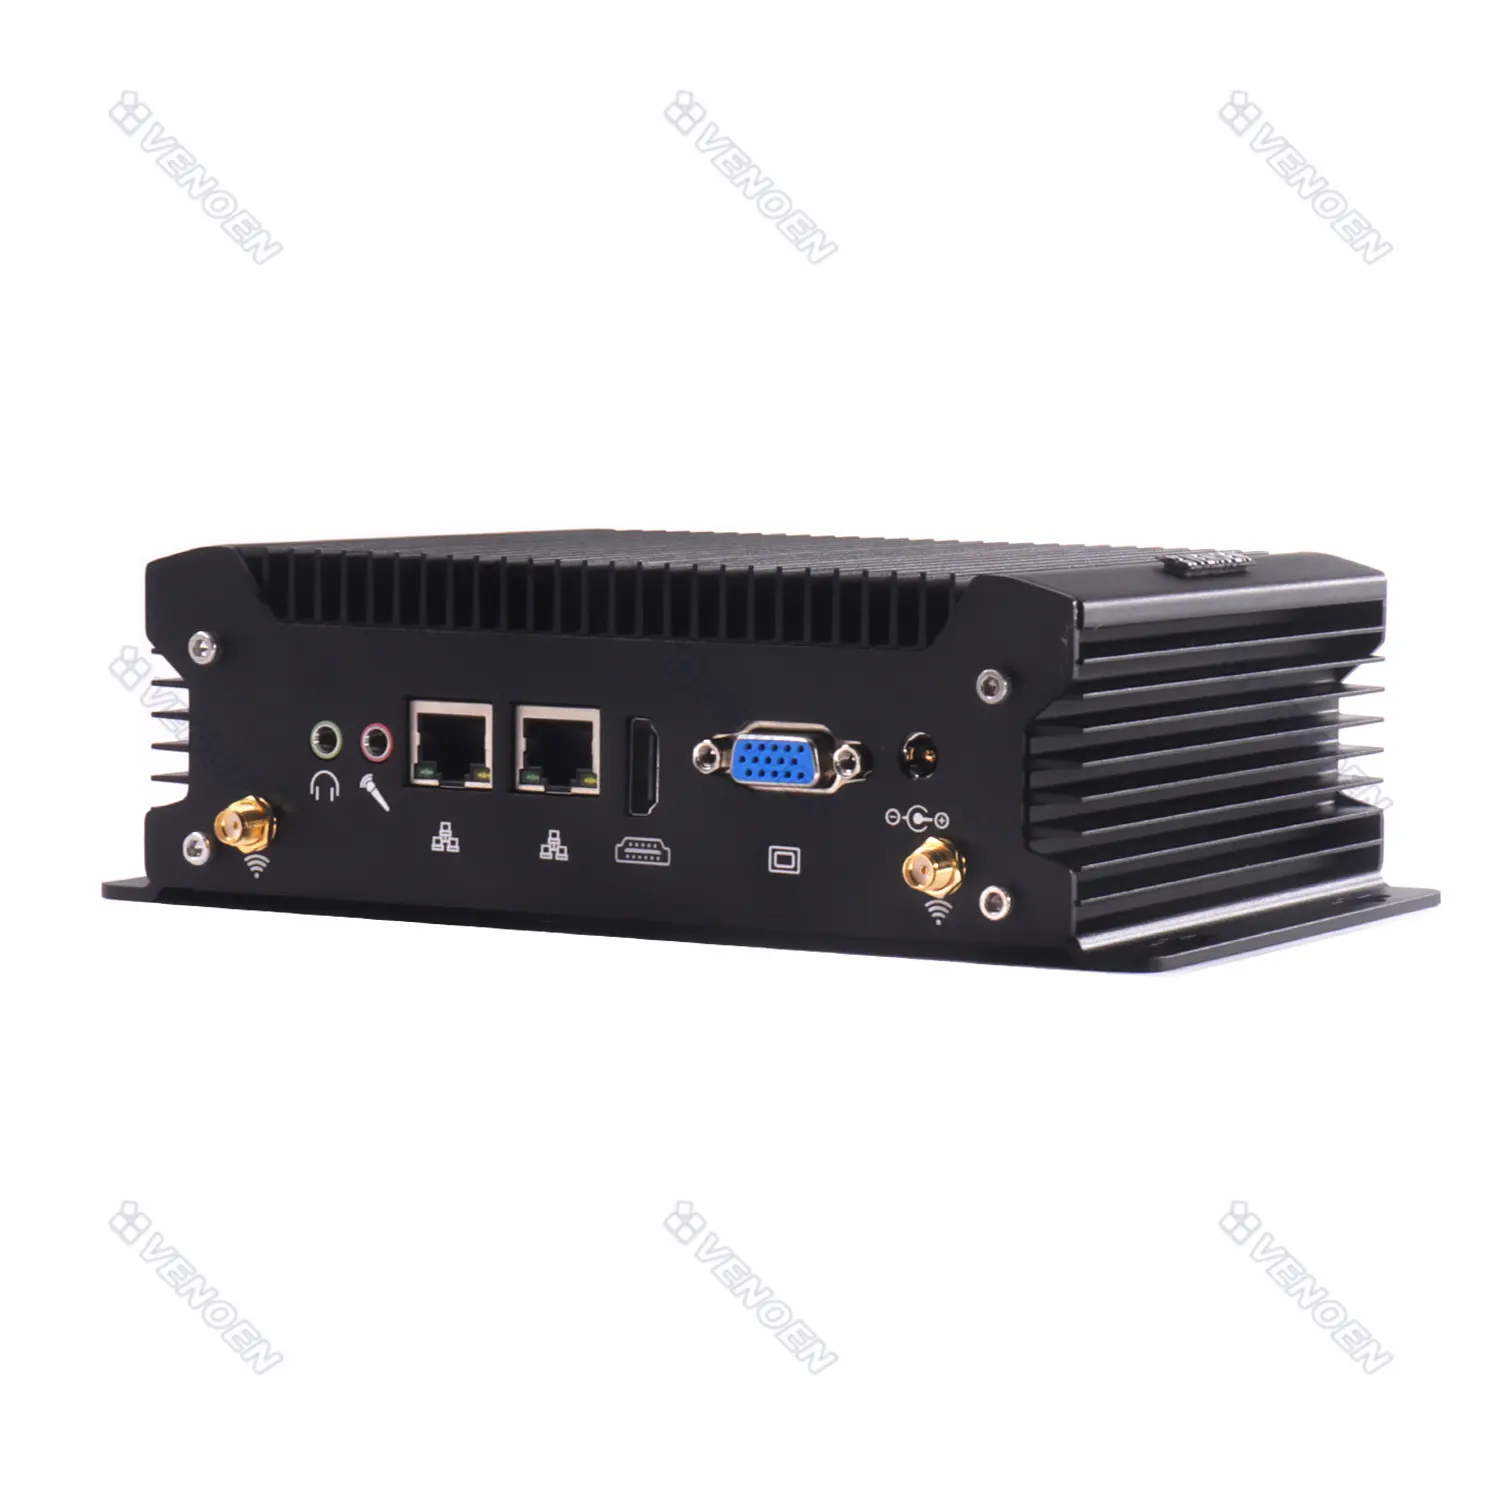 Fanless Mini PC 8*USB Int el Core i7 4578U i5 7287U 4278U i3 6157U Vending machine embedded RS232 HD Ml VGA Win 10 Linux